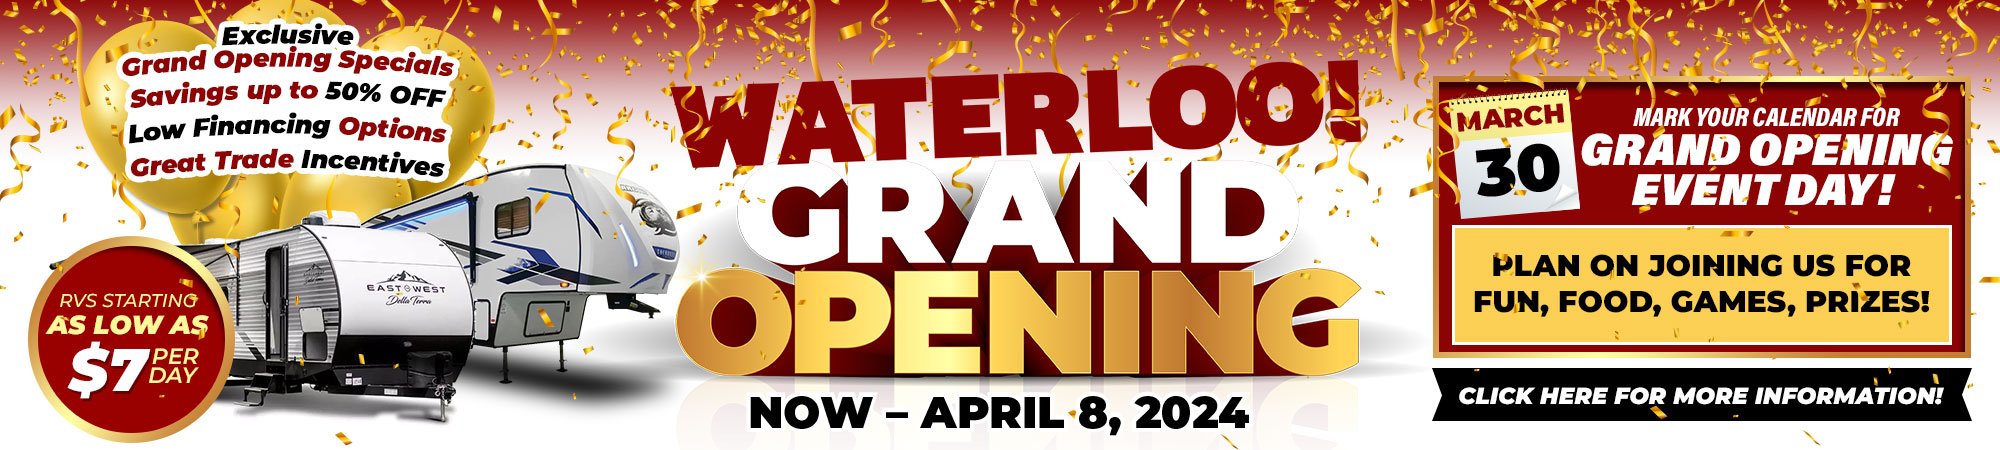 Waterloo Grand Opening